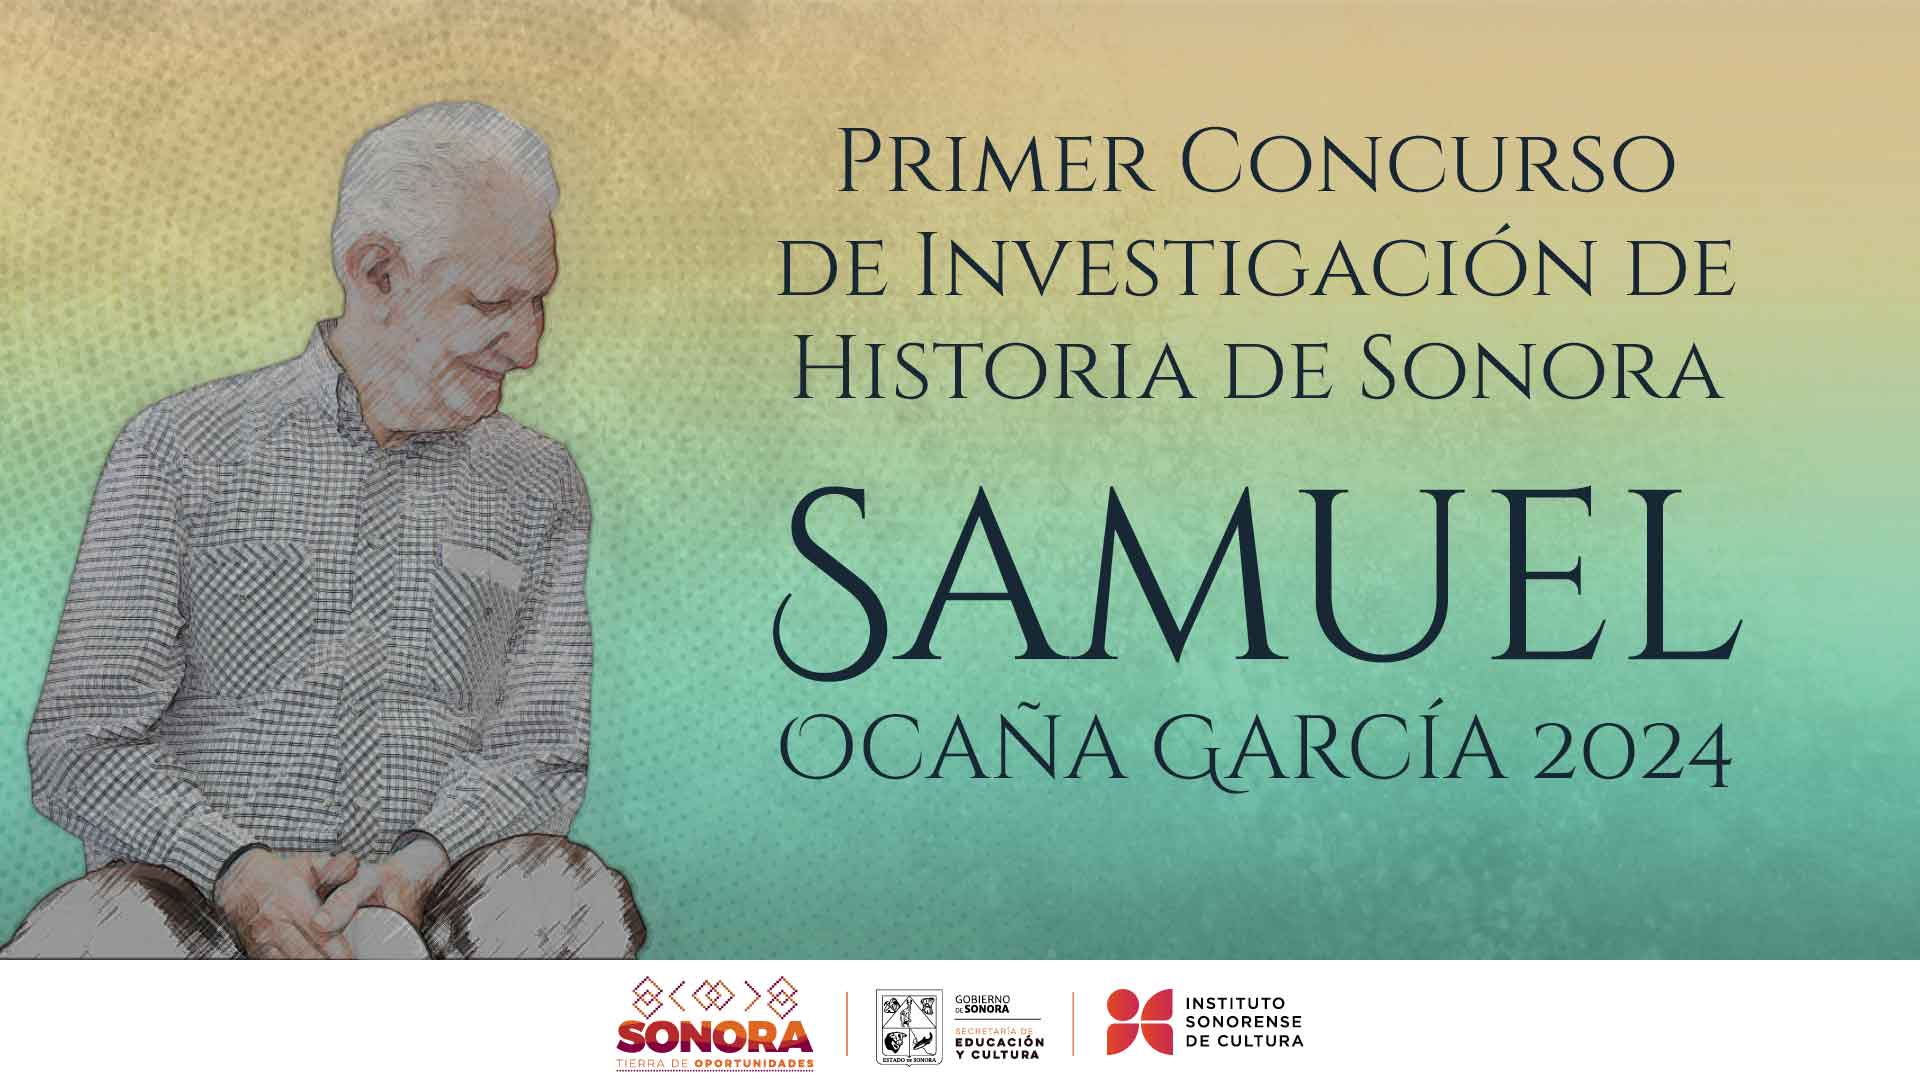 Primer Concurso de Investigación de Historia de Sonora “Samuel Ocaña García” 2024